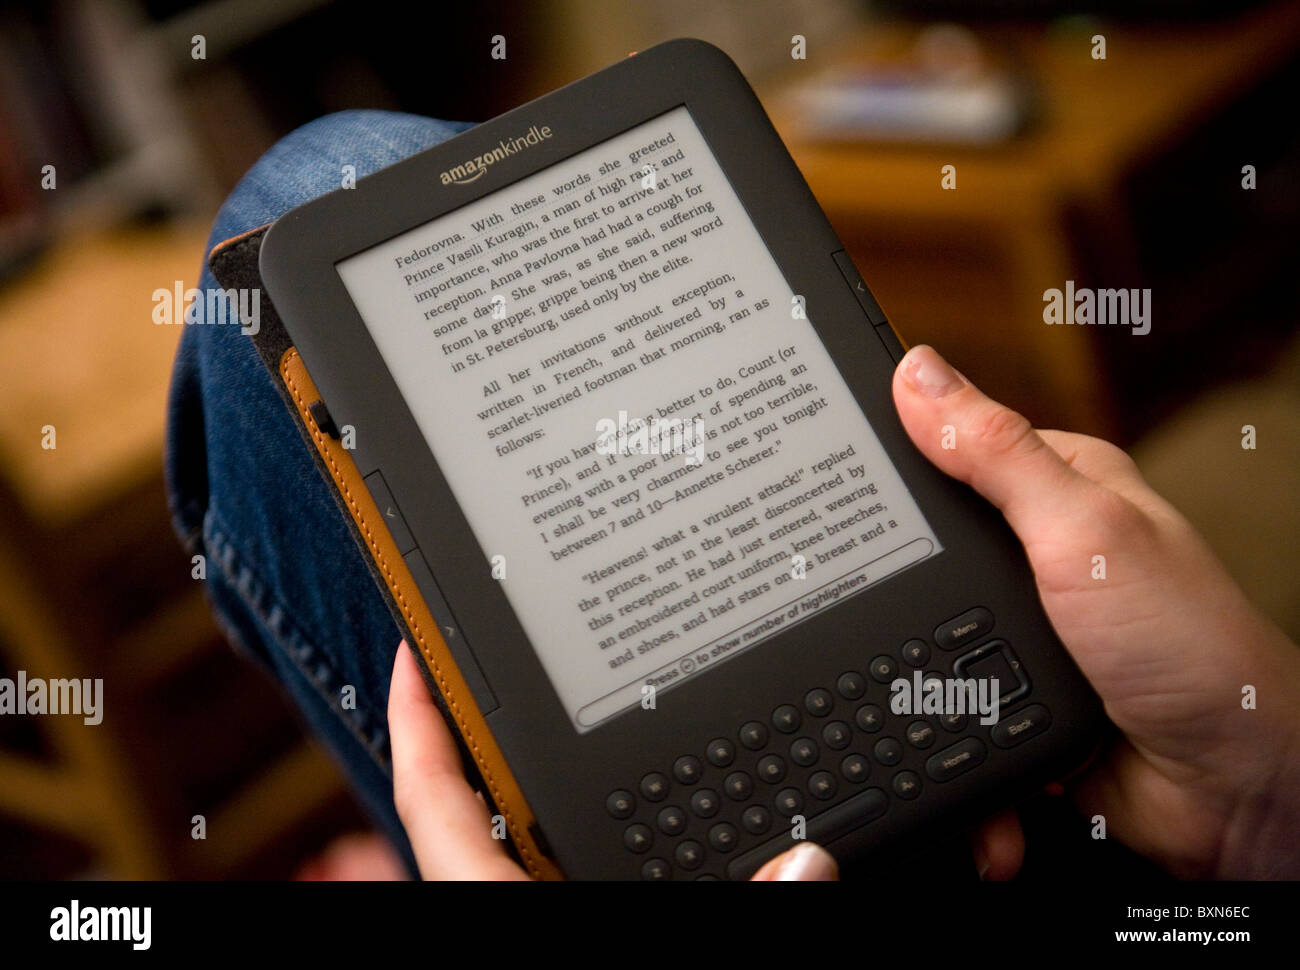 Amazon.com Kindle e-Reader. Stockfoto